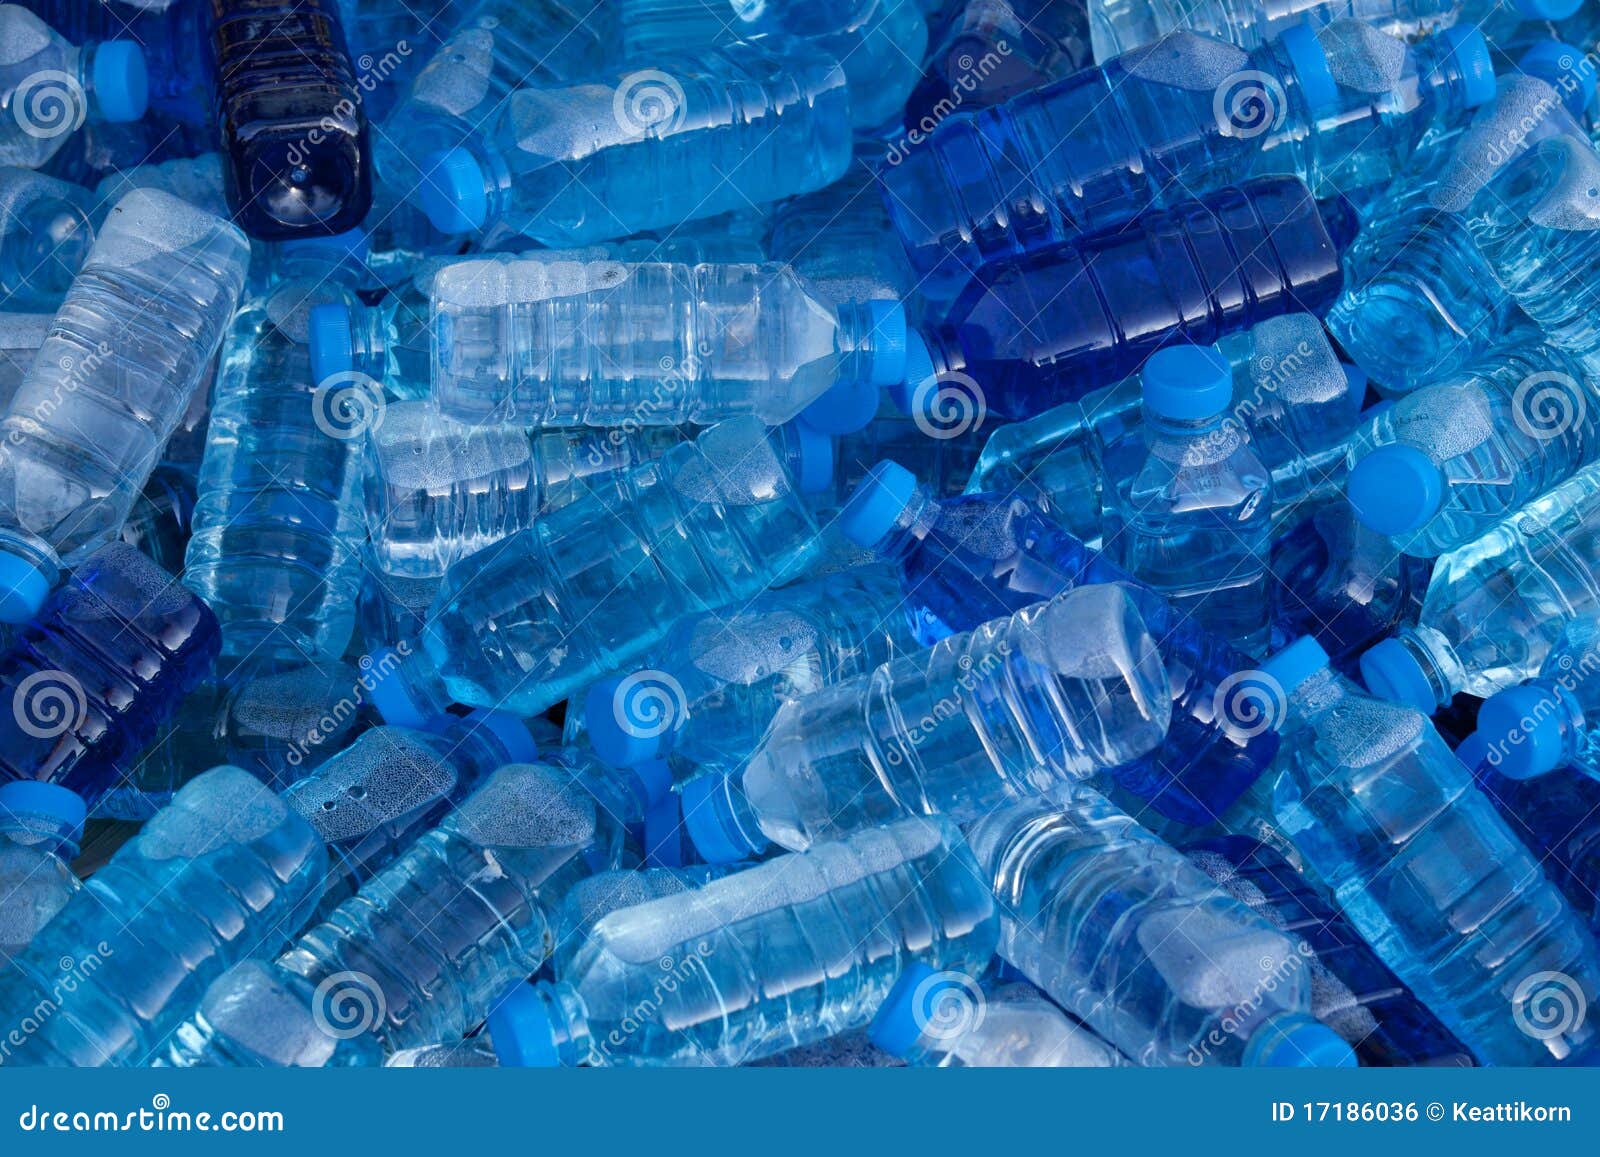 pile of fresh water bottles